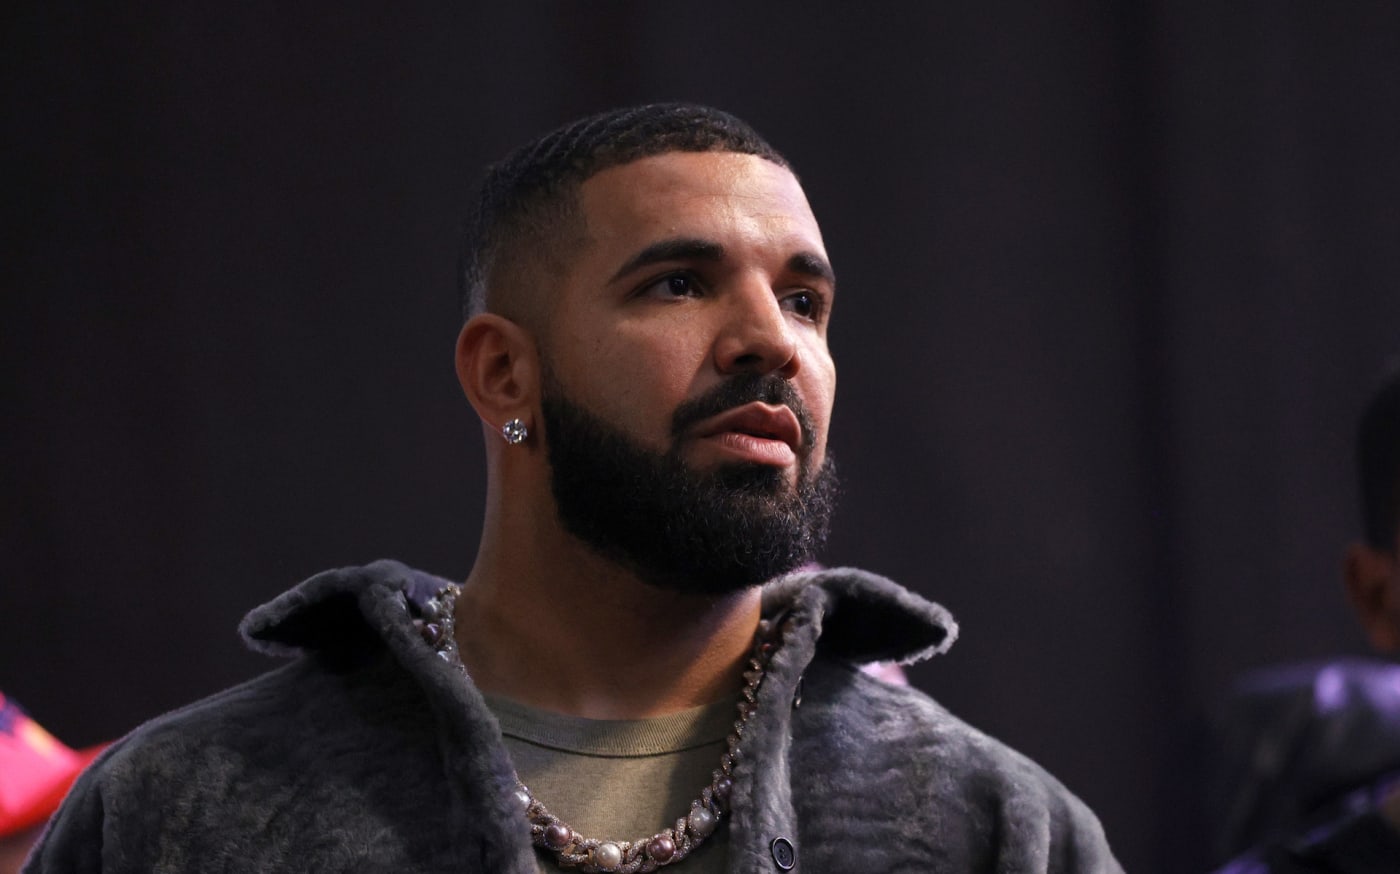 Drake onstage at URL's "Till Death Do Us Part" rap battle